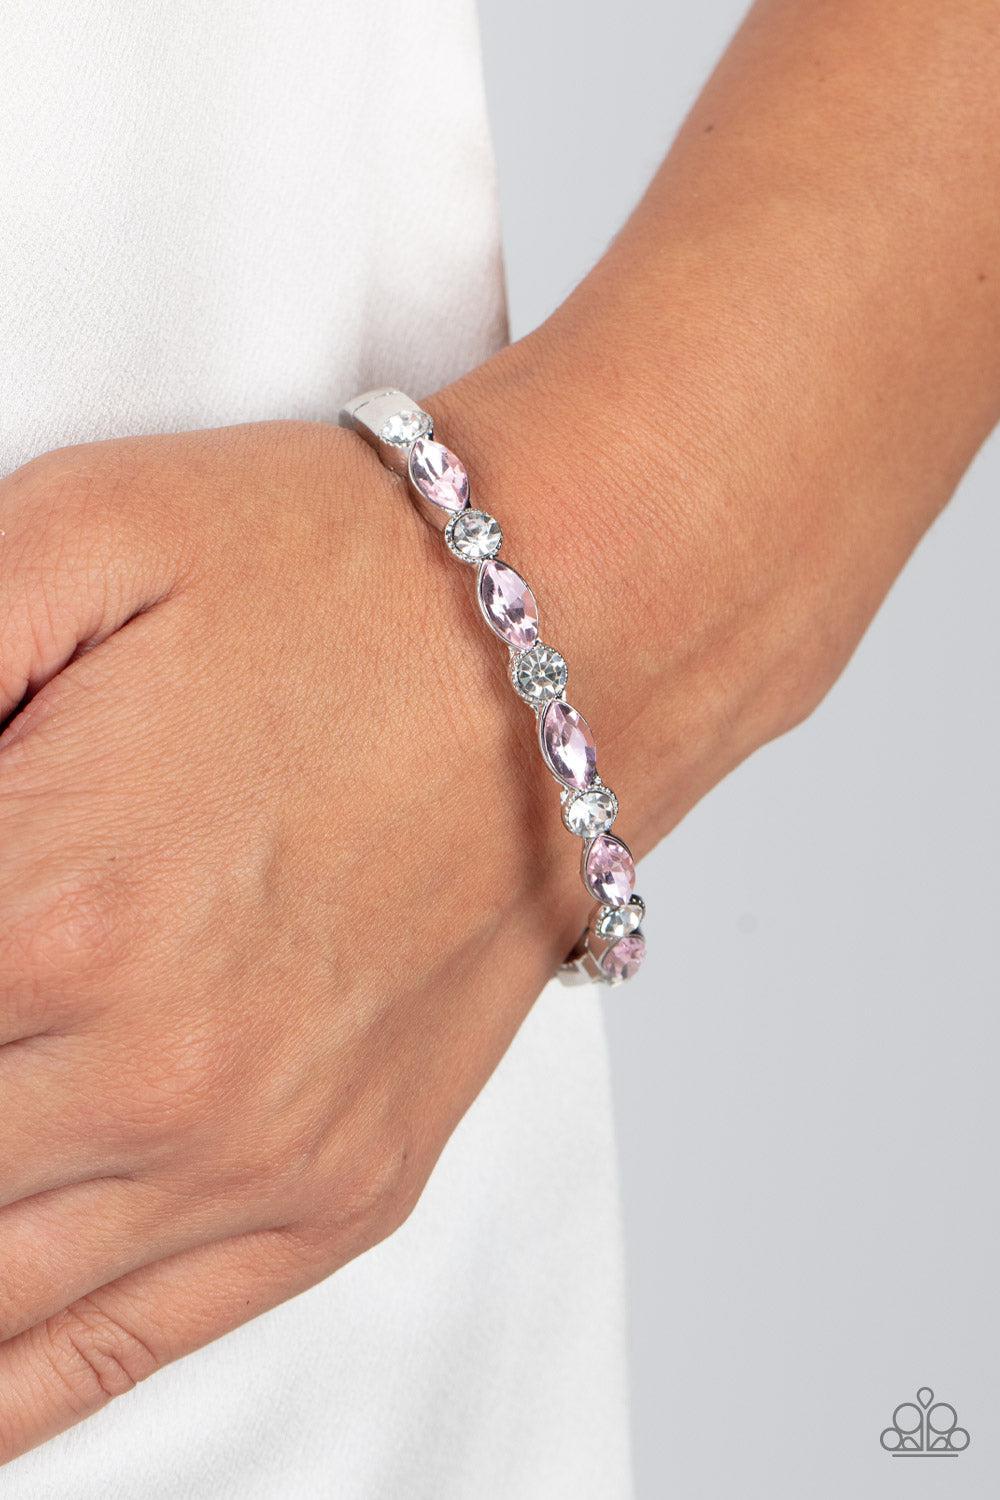 Petitely Powerhouse Pink Rhinestone Bracelet - Paparazzi Accessories-on model - CarasShop.com - $5 Jewelry by Cara Jewels